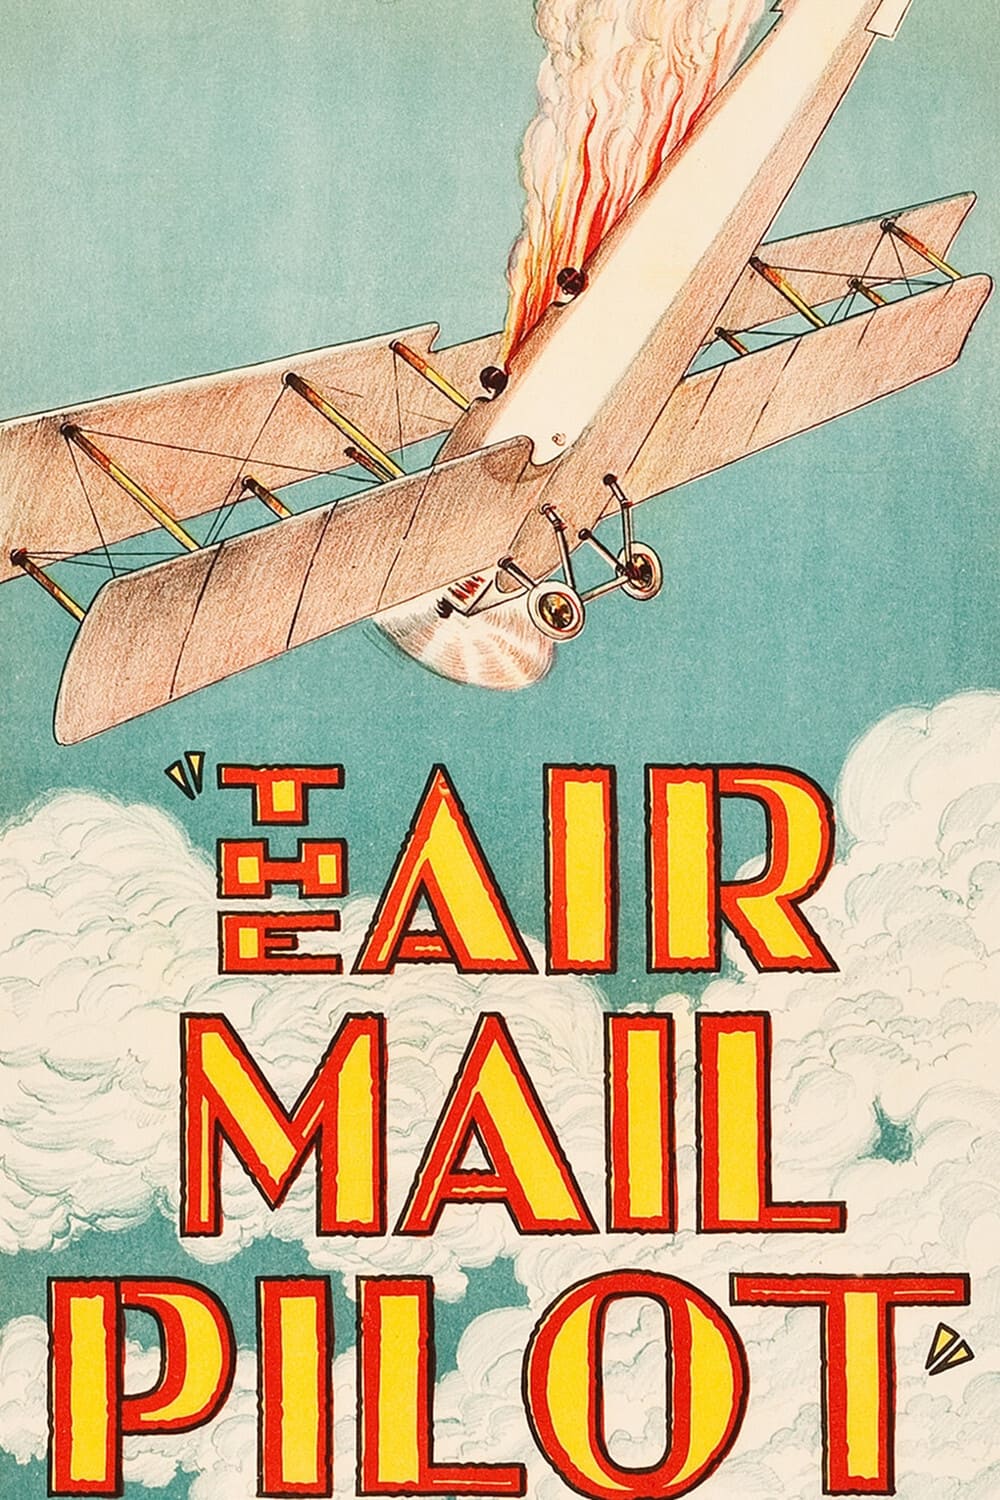 The Air Mail Pilot